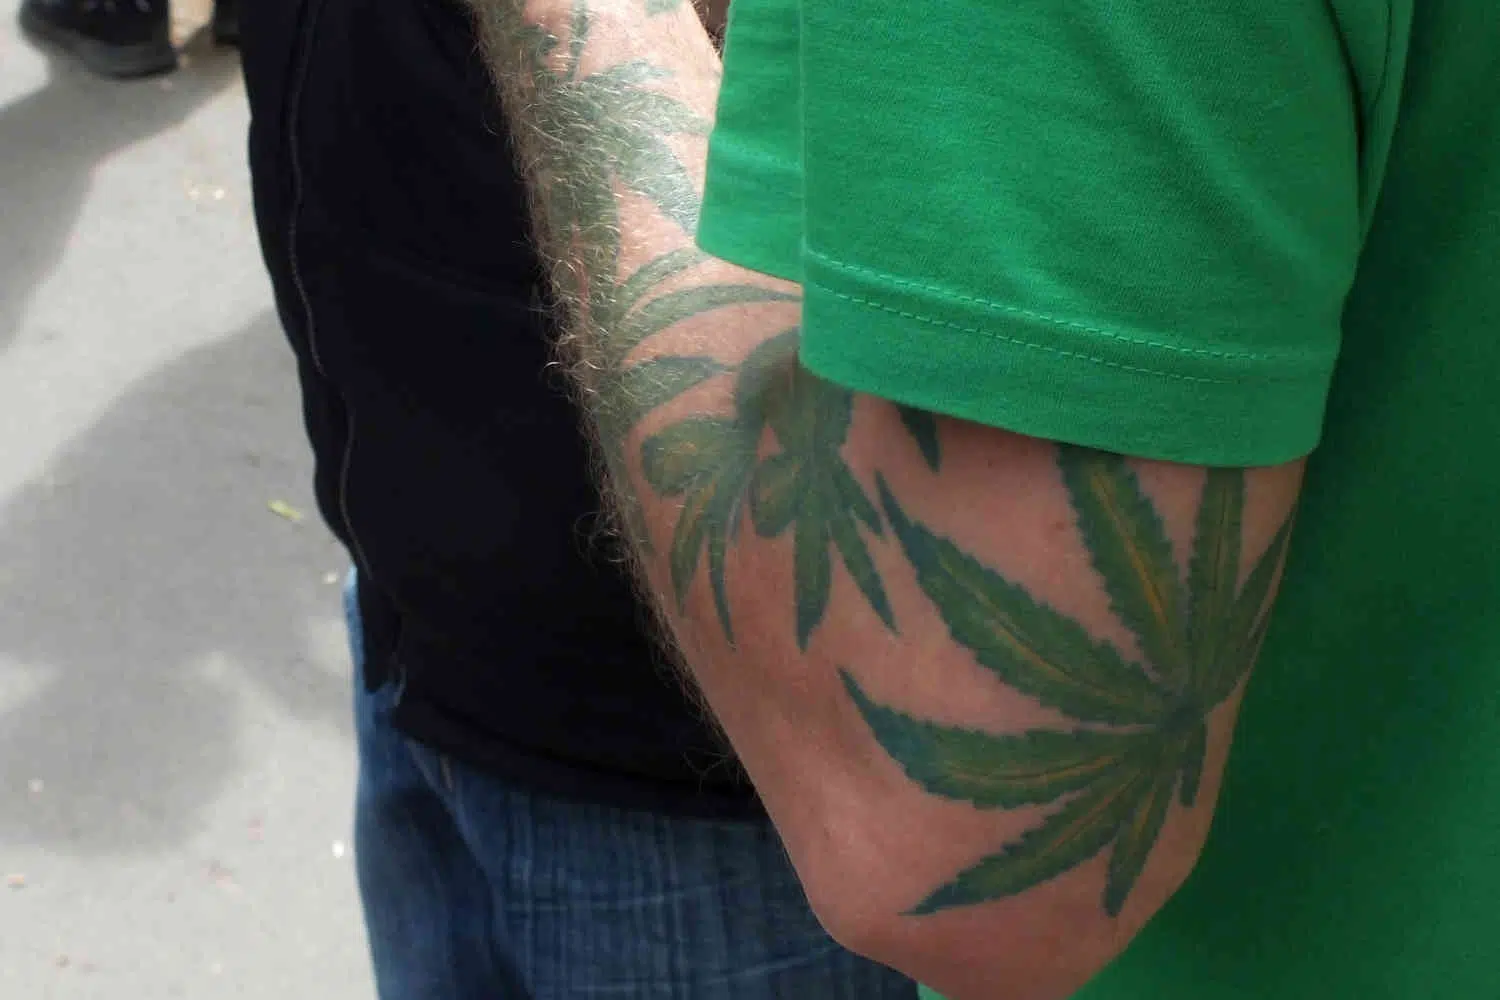 Man displays his new school stoner tattoo sleeve